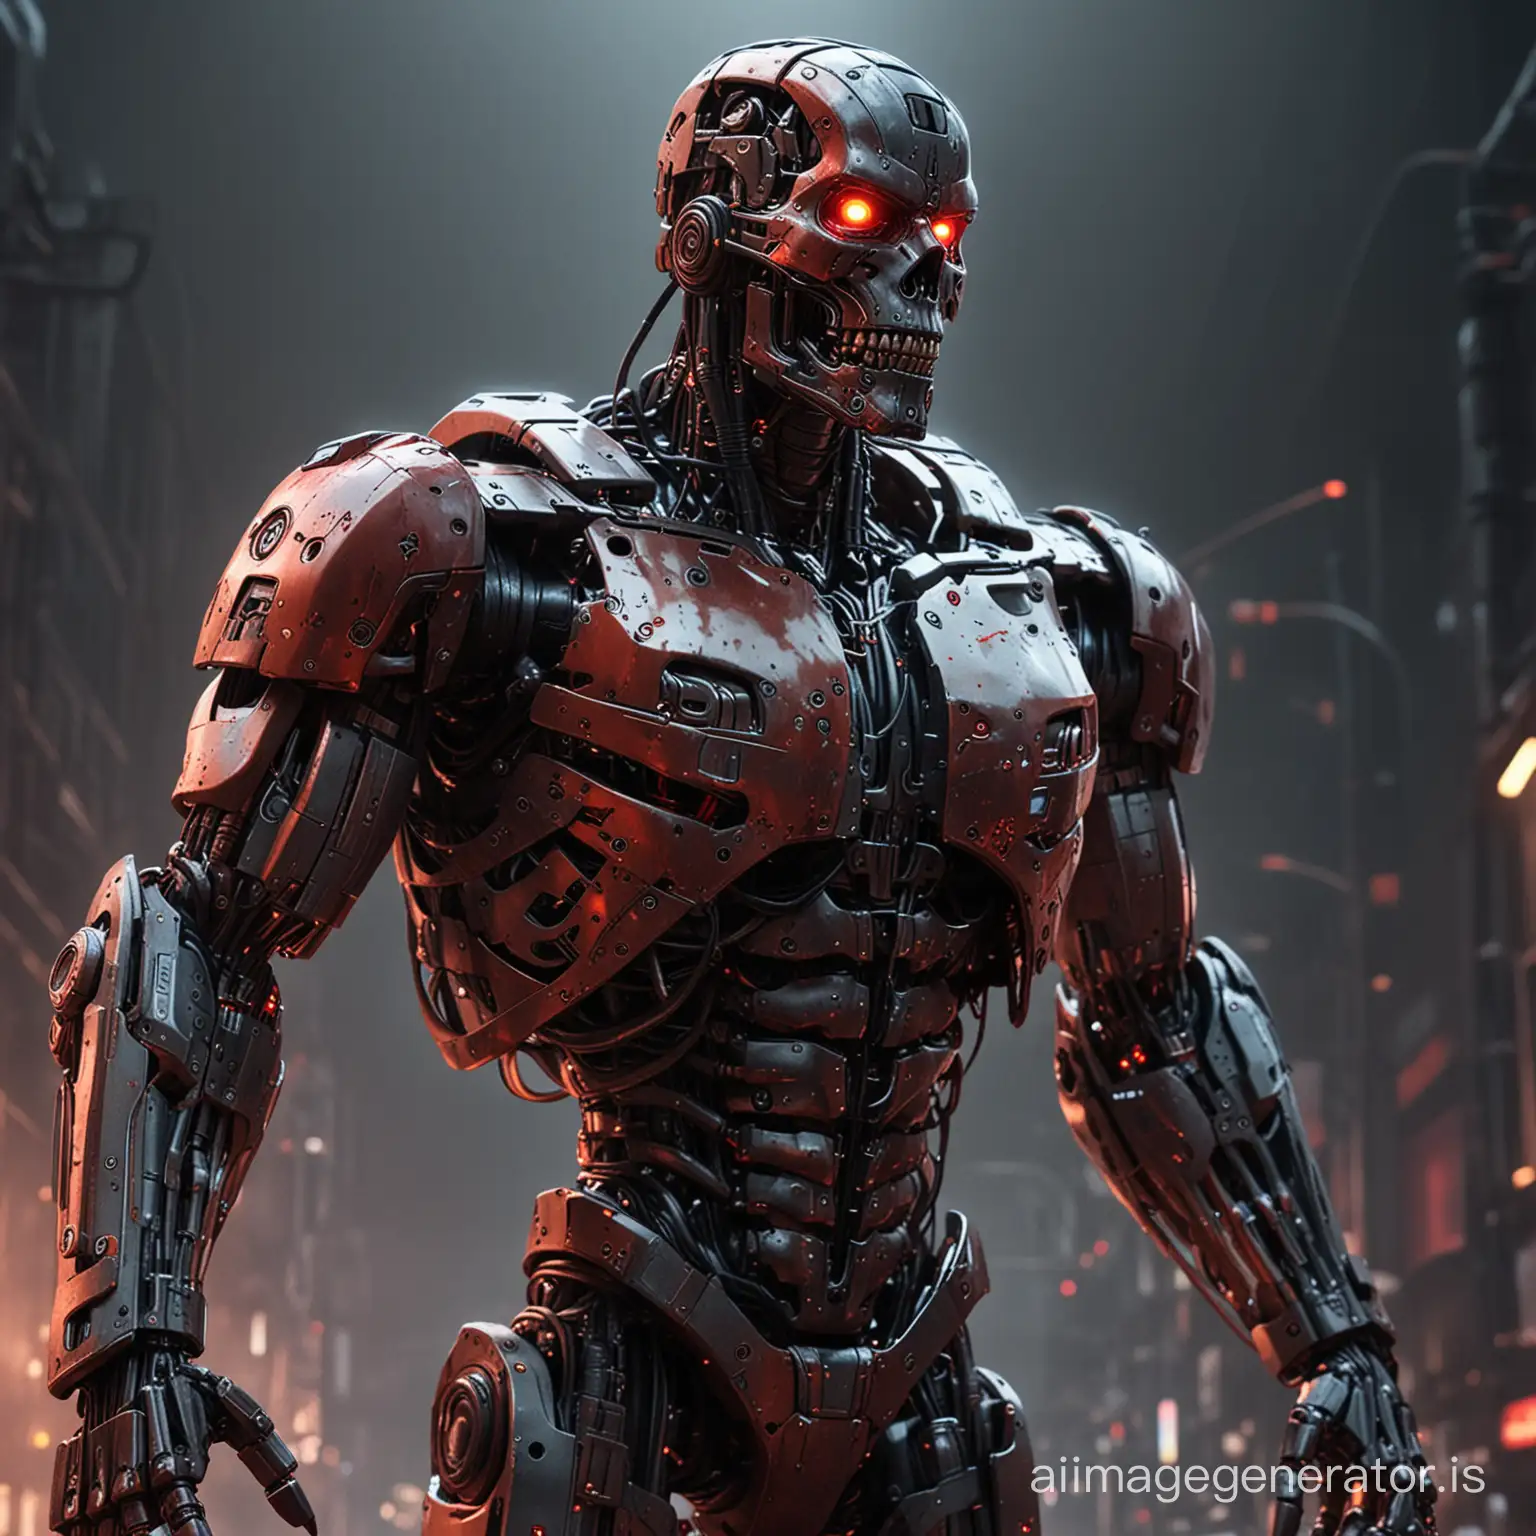 Futuristic-Terminator-Robot-with-Liquid-Body-and-Menacing-Red-Glow